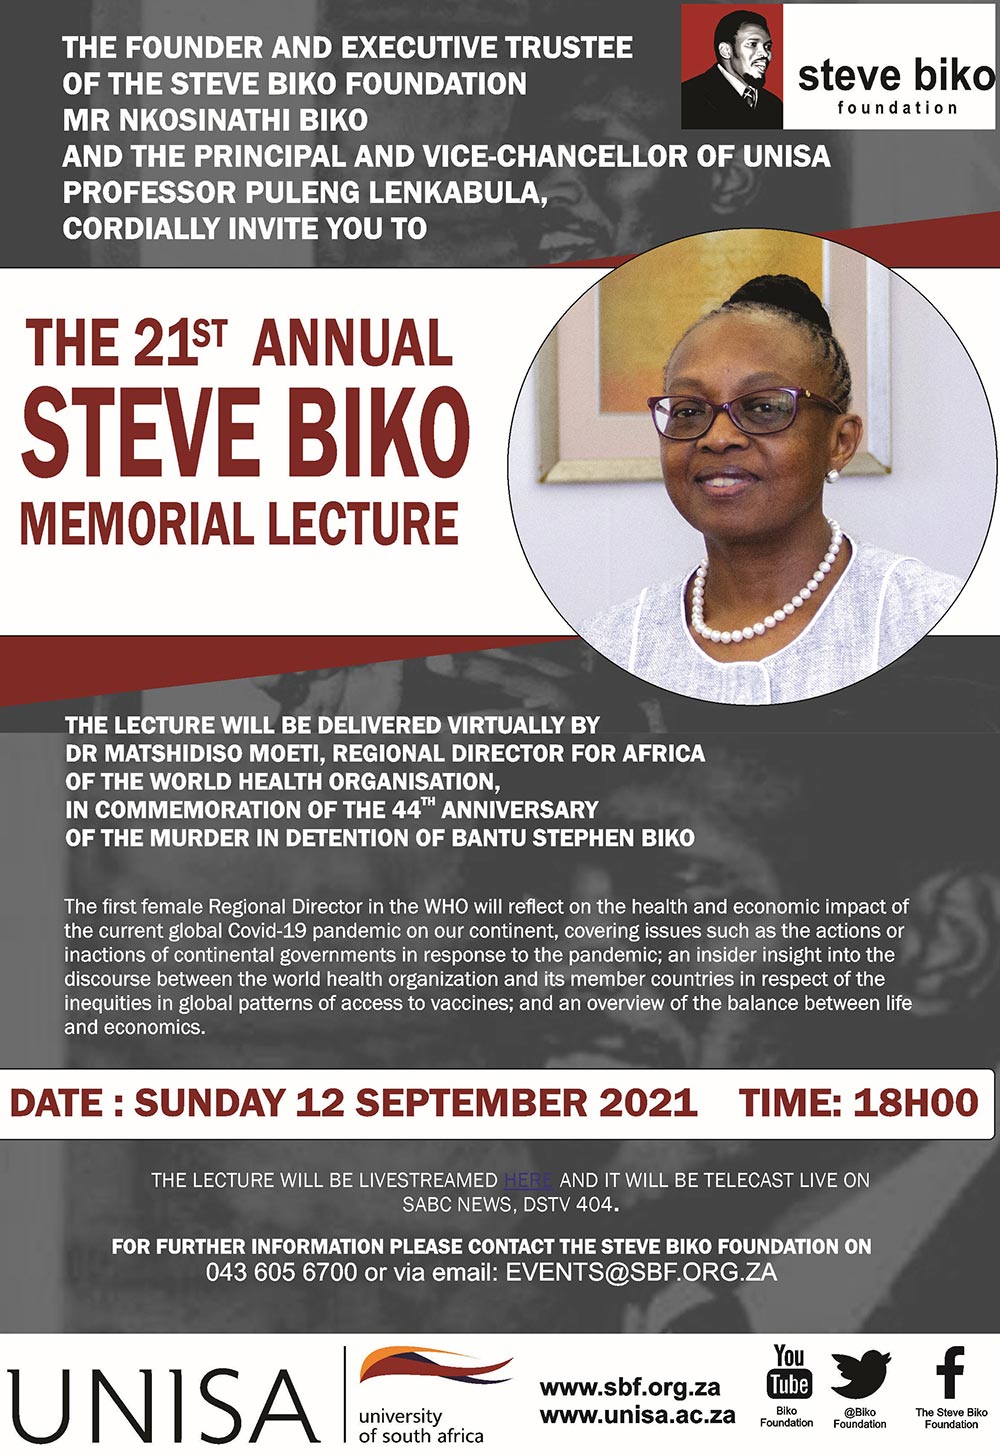 The 21st Annual Steve Biko Memorial Lecture